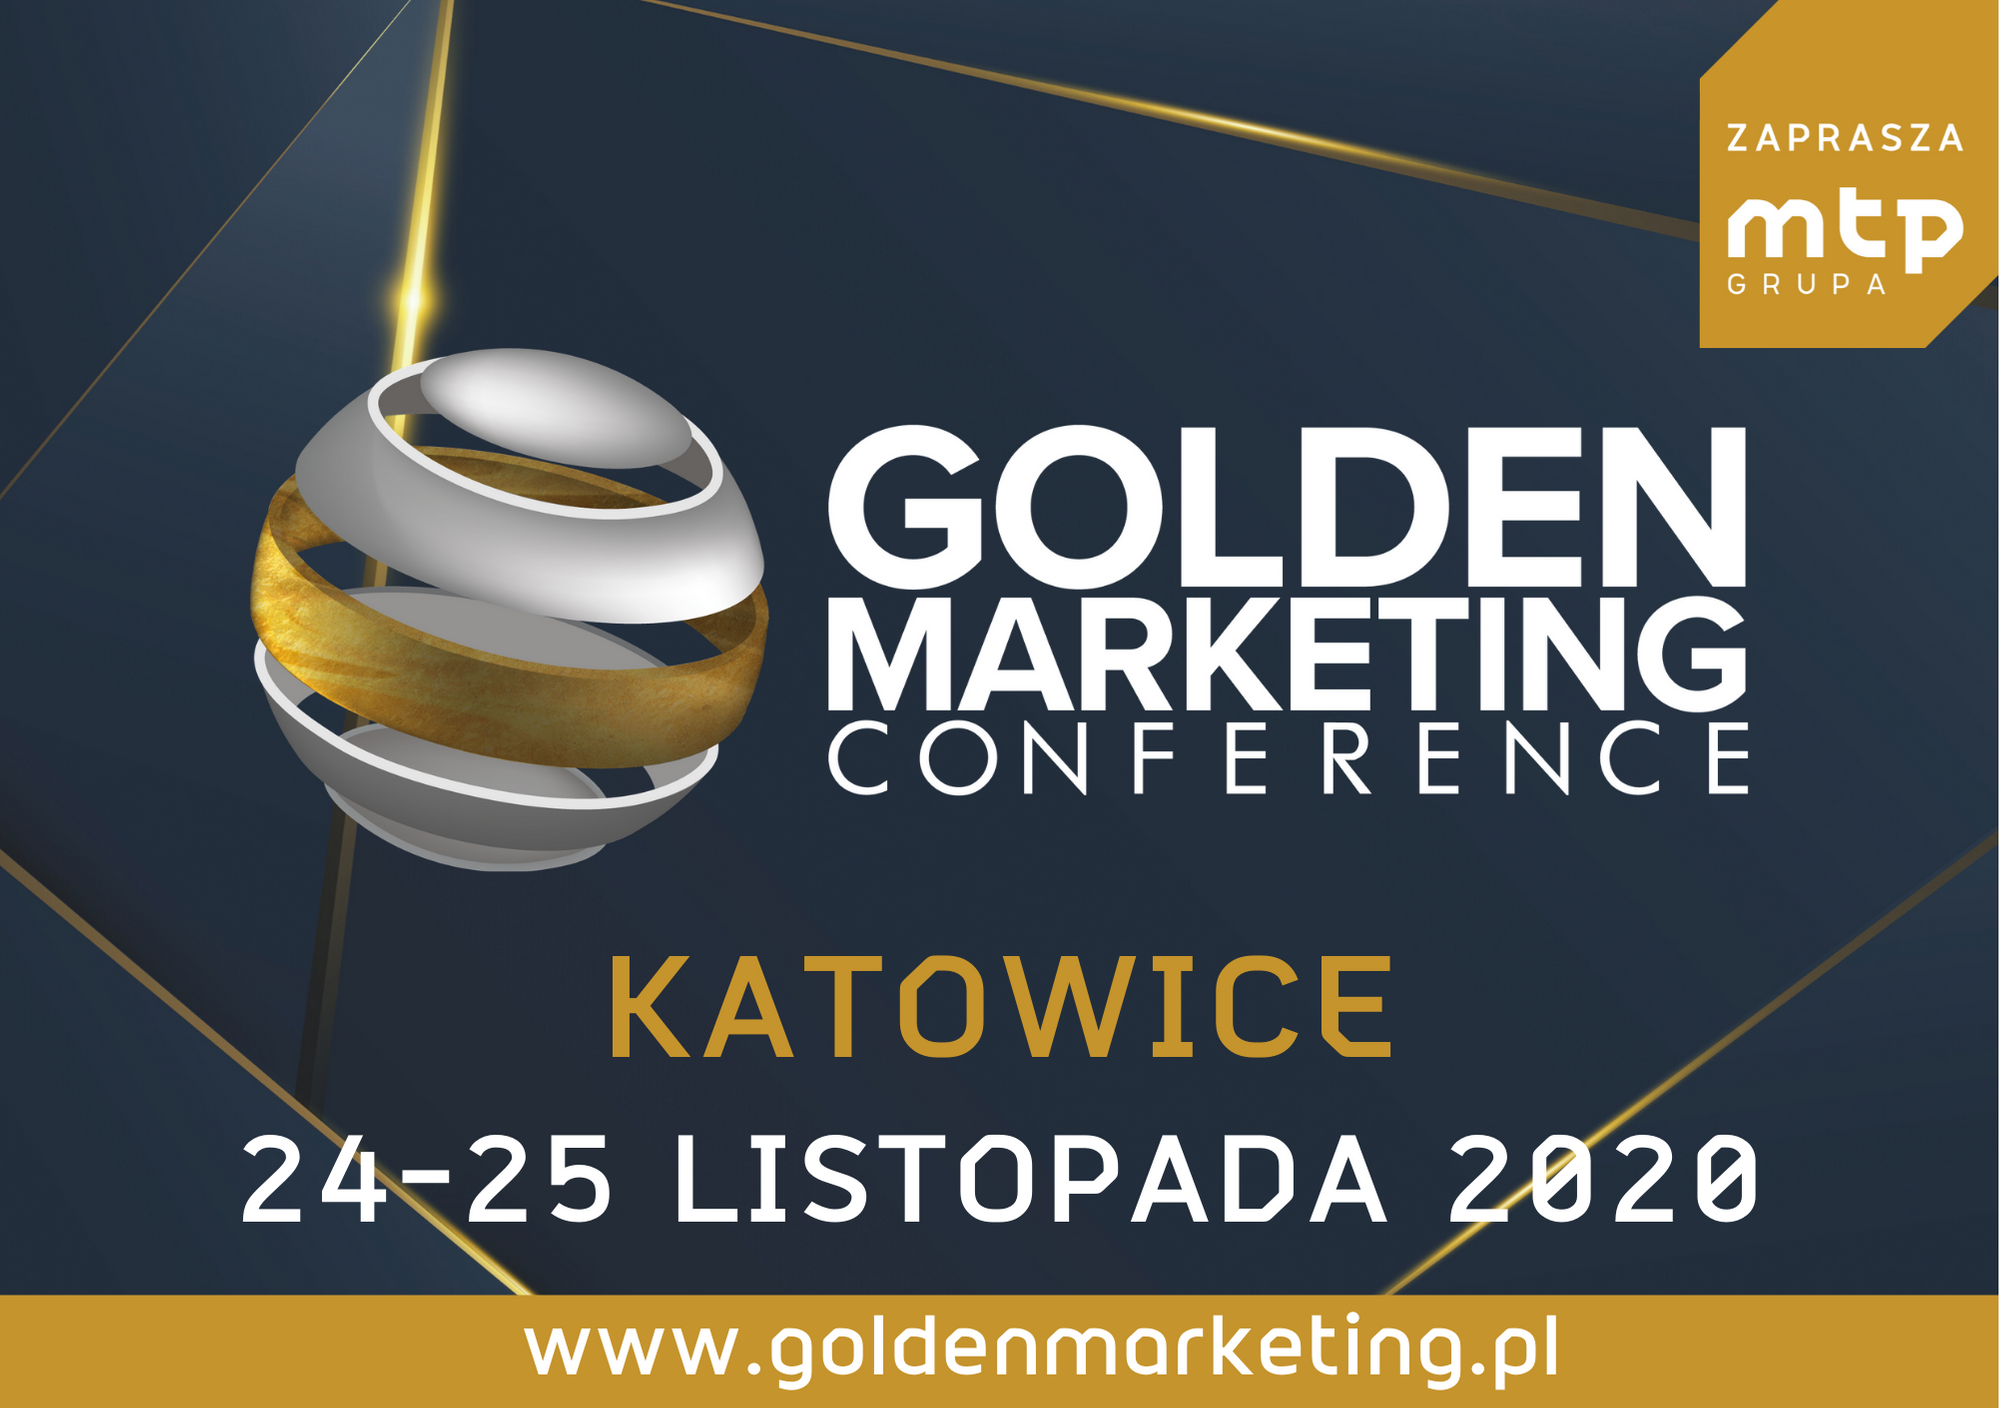 Golden Marketing Conference Poznań 2020